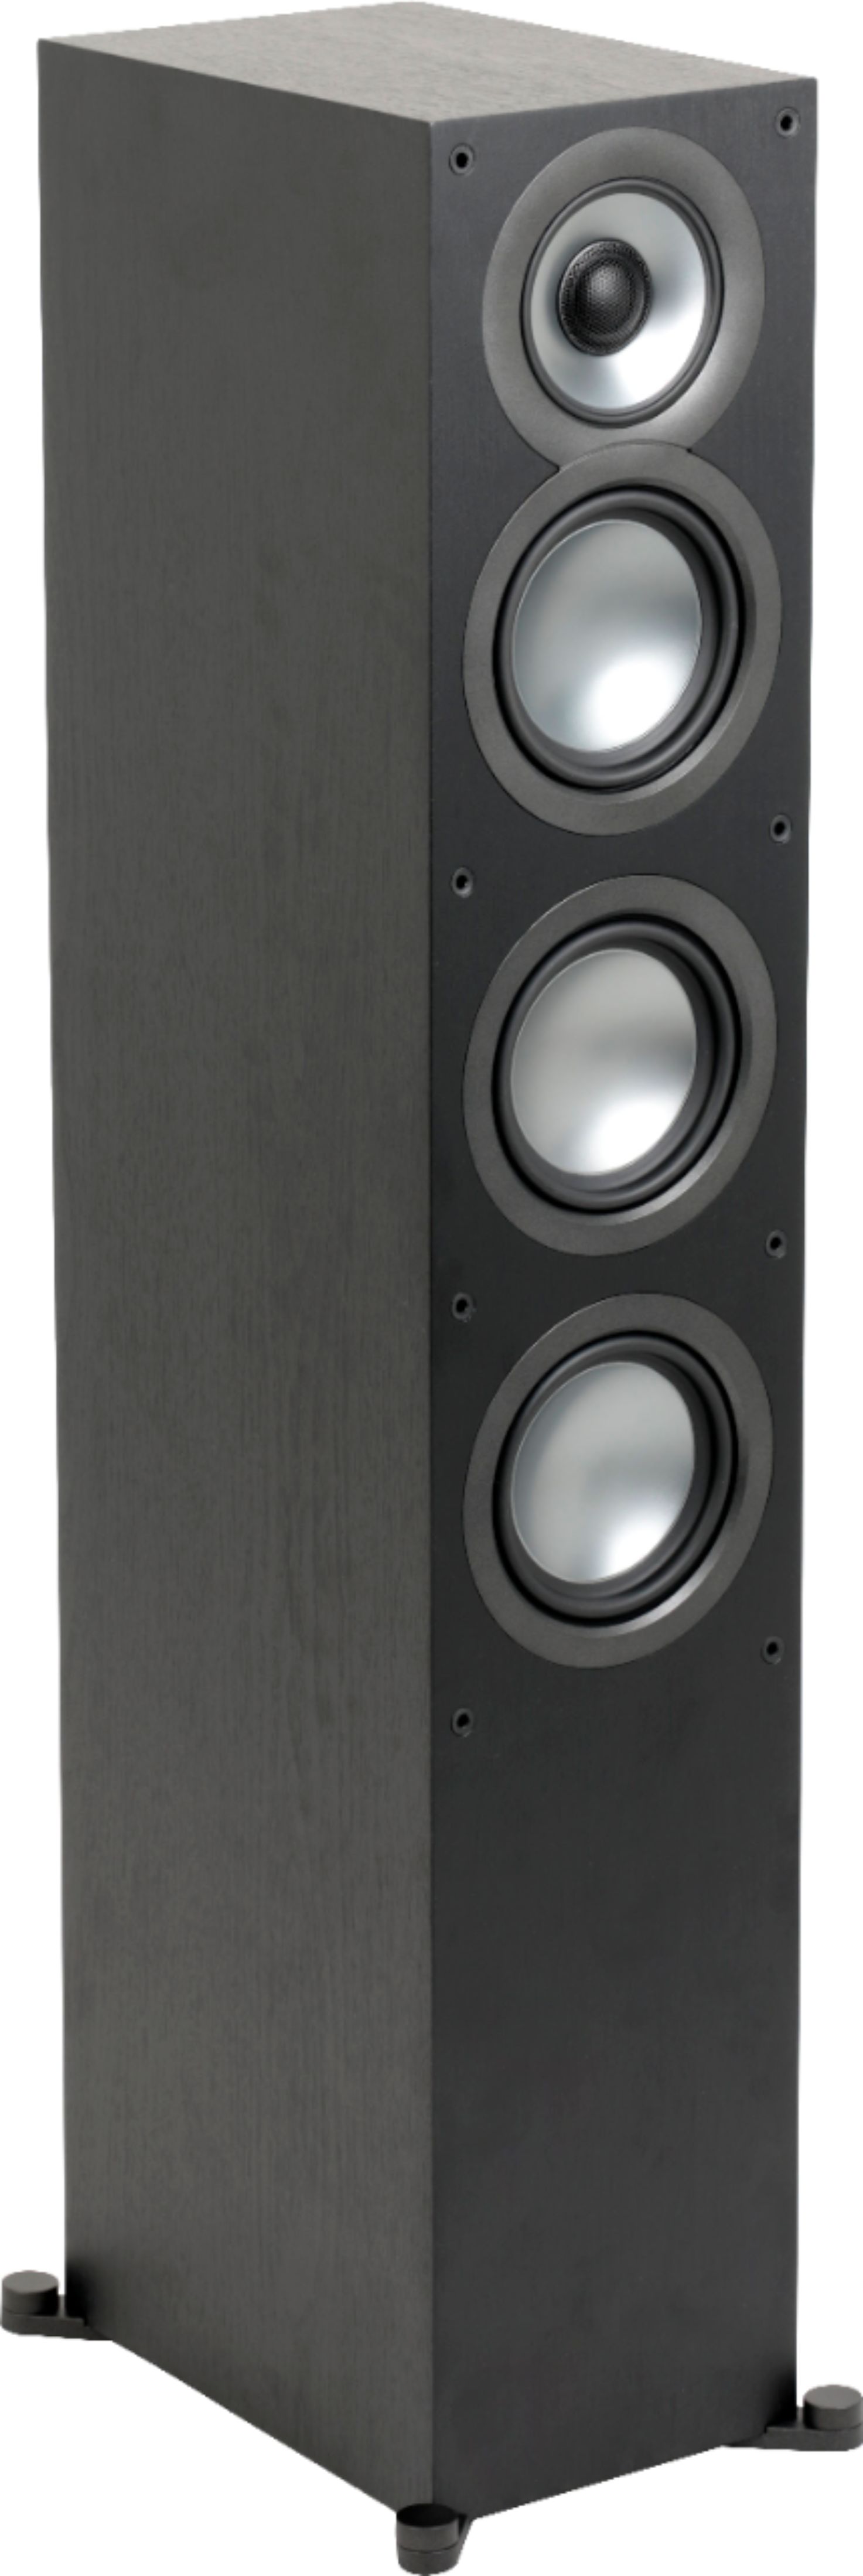 Angle View: ELAC - Uni-Fi 2.0 Floorstanding Speaker (Each) - Black